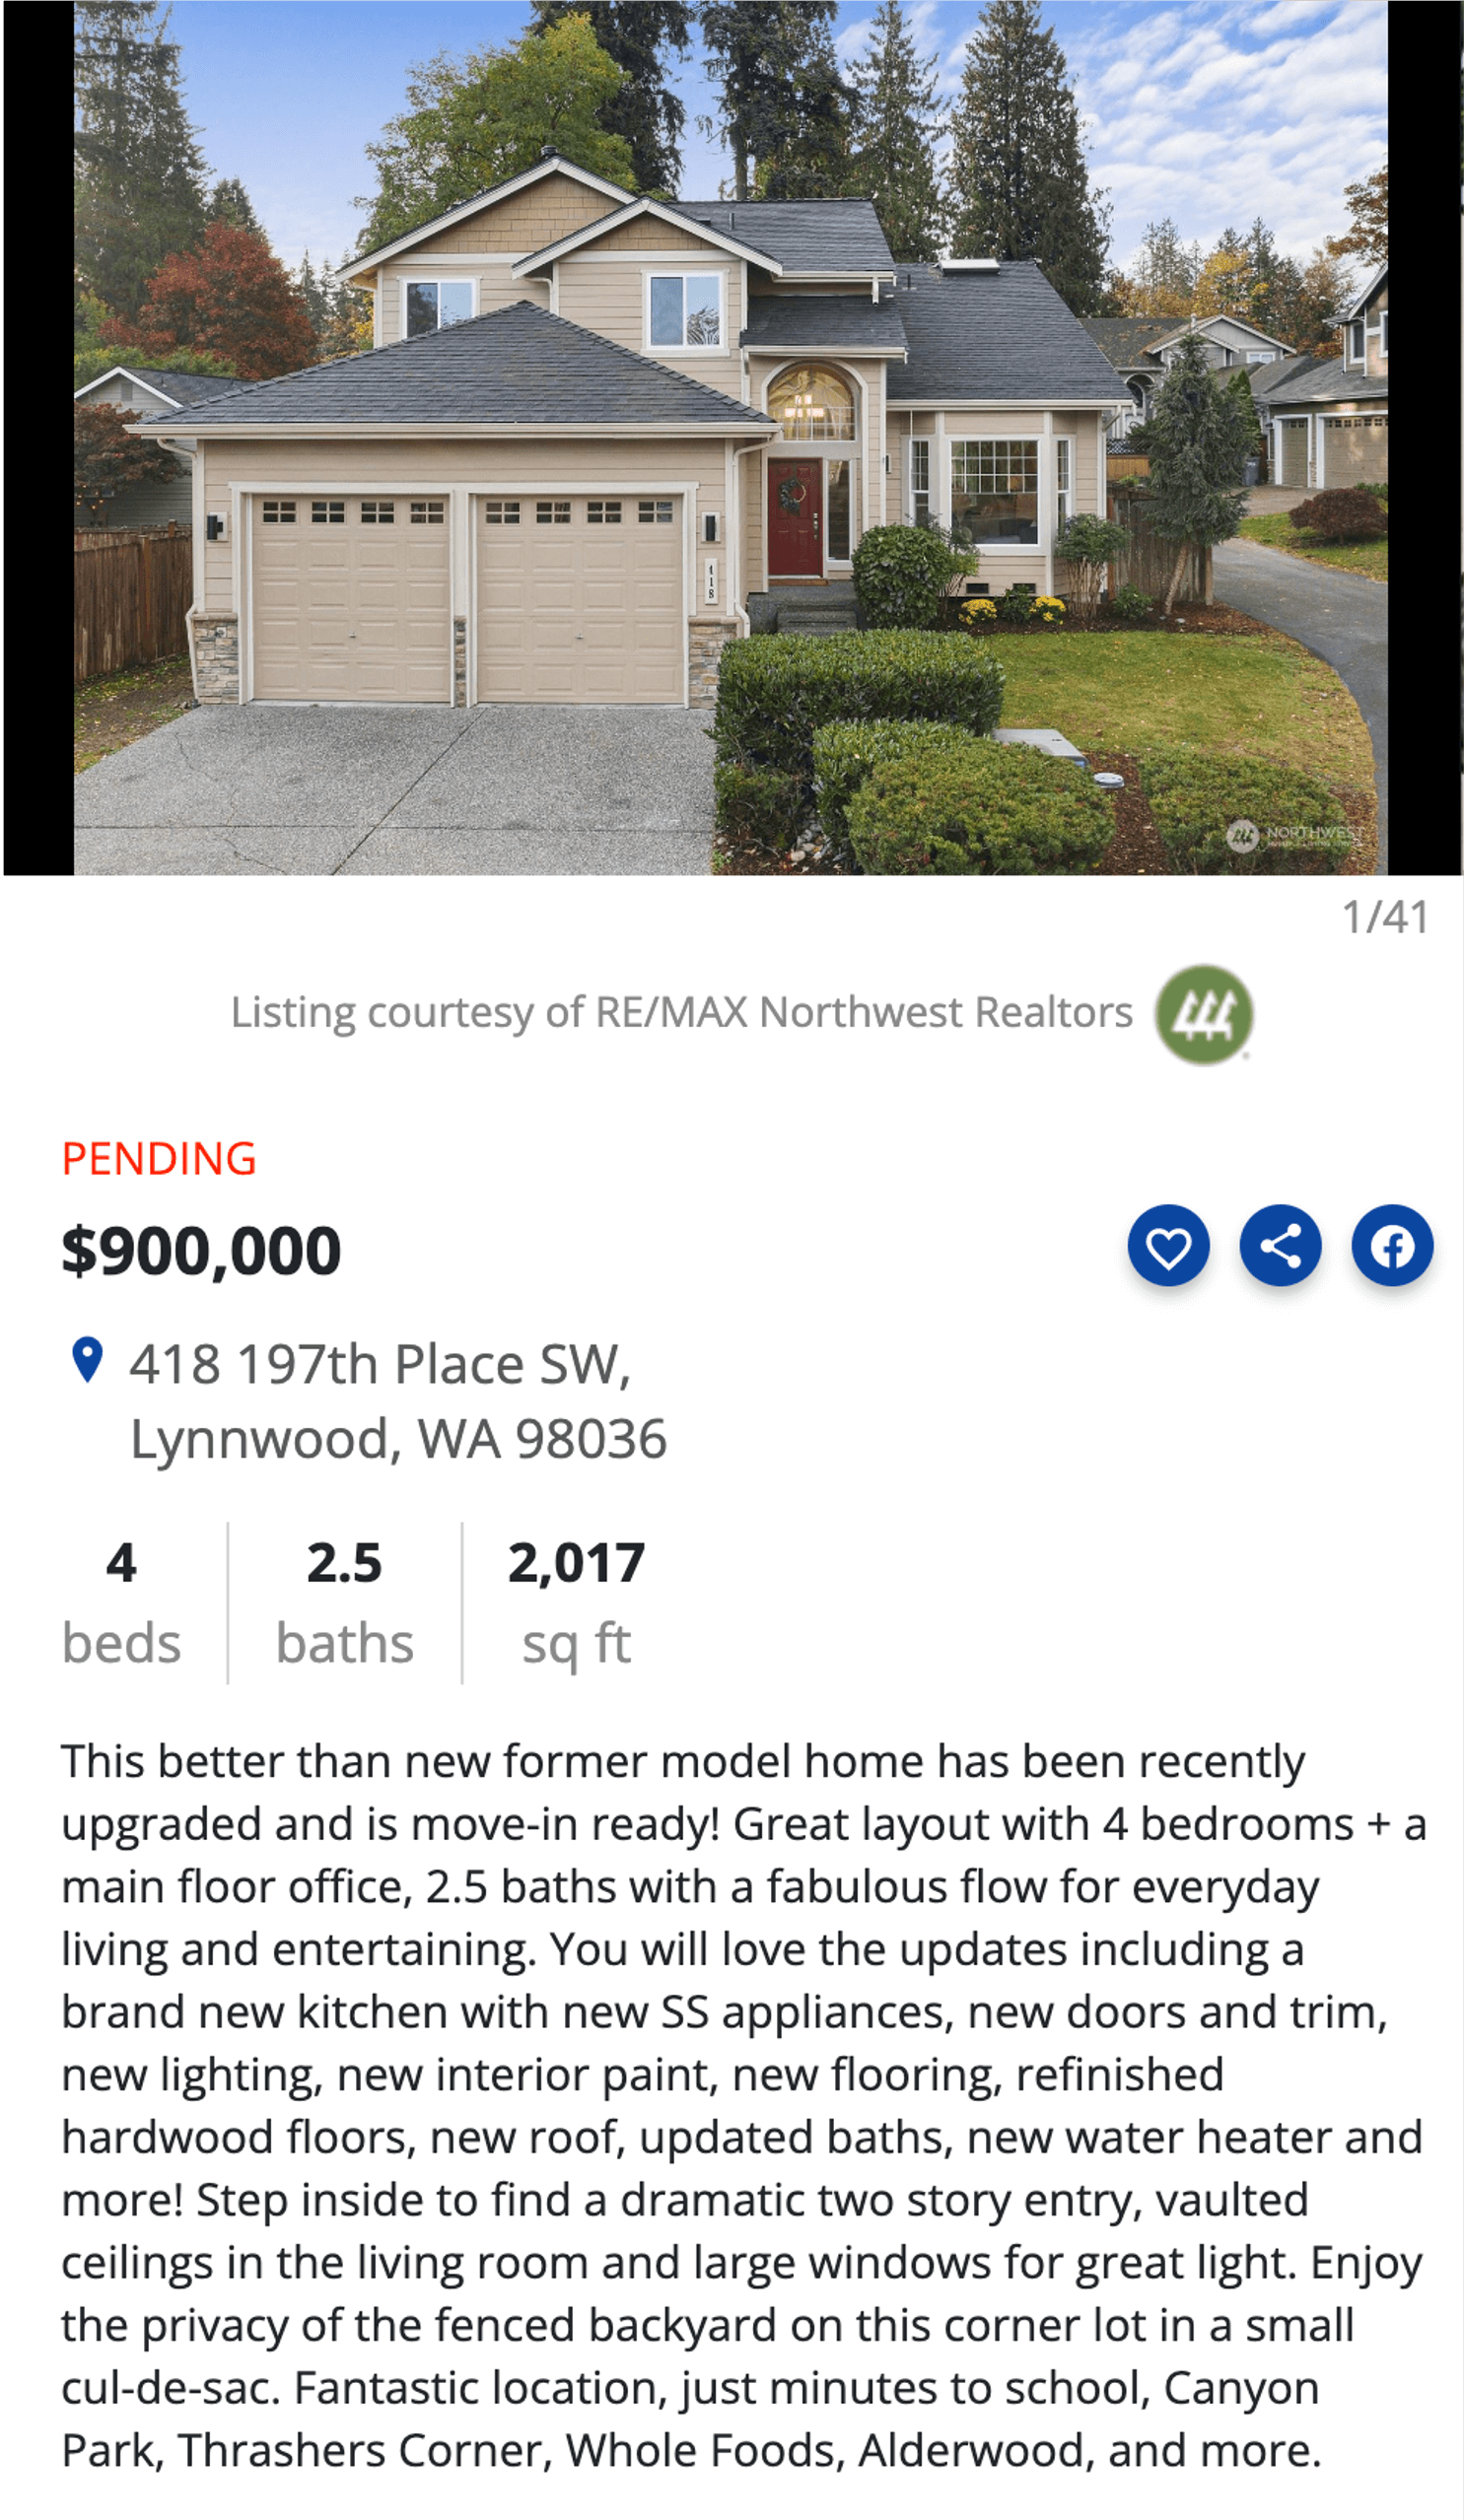 Real estate listing description example #2